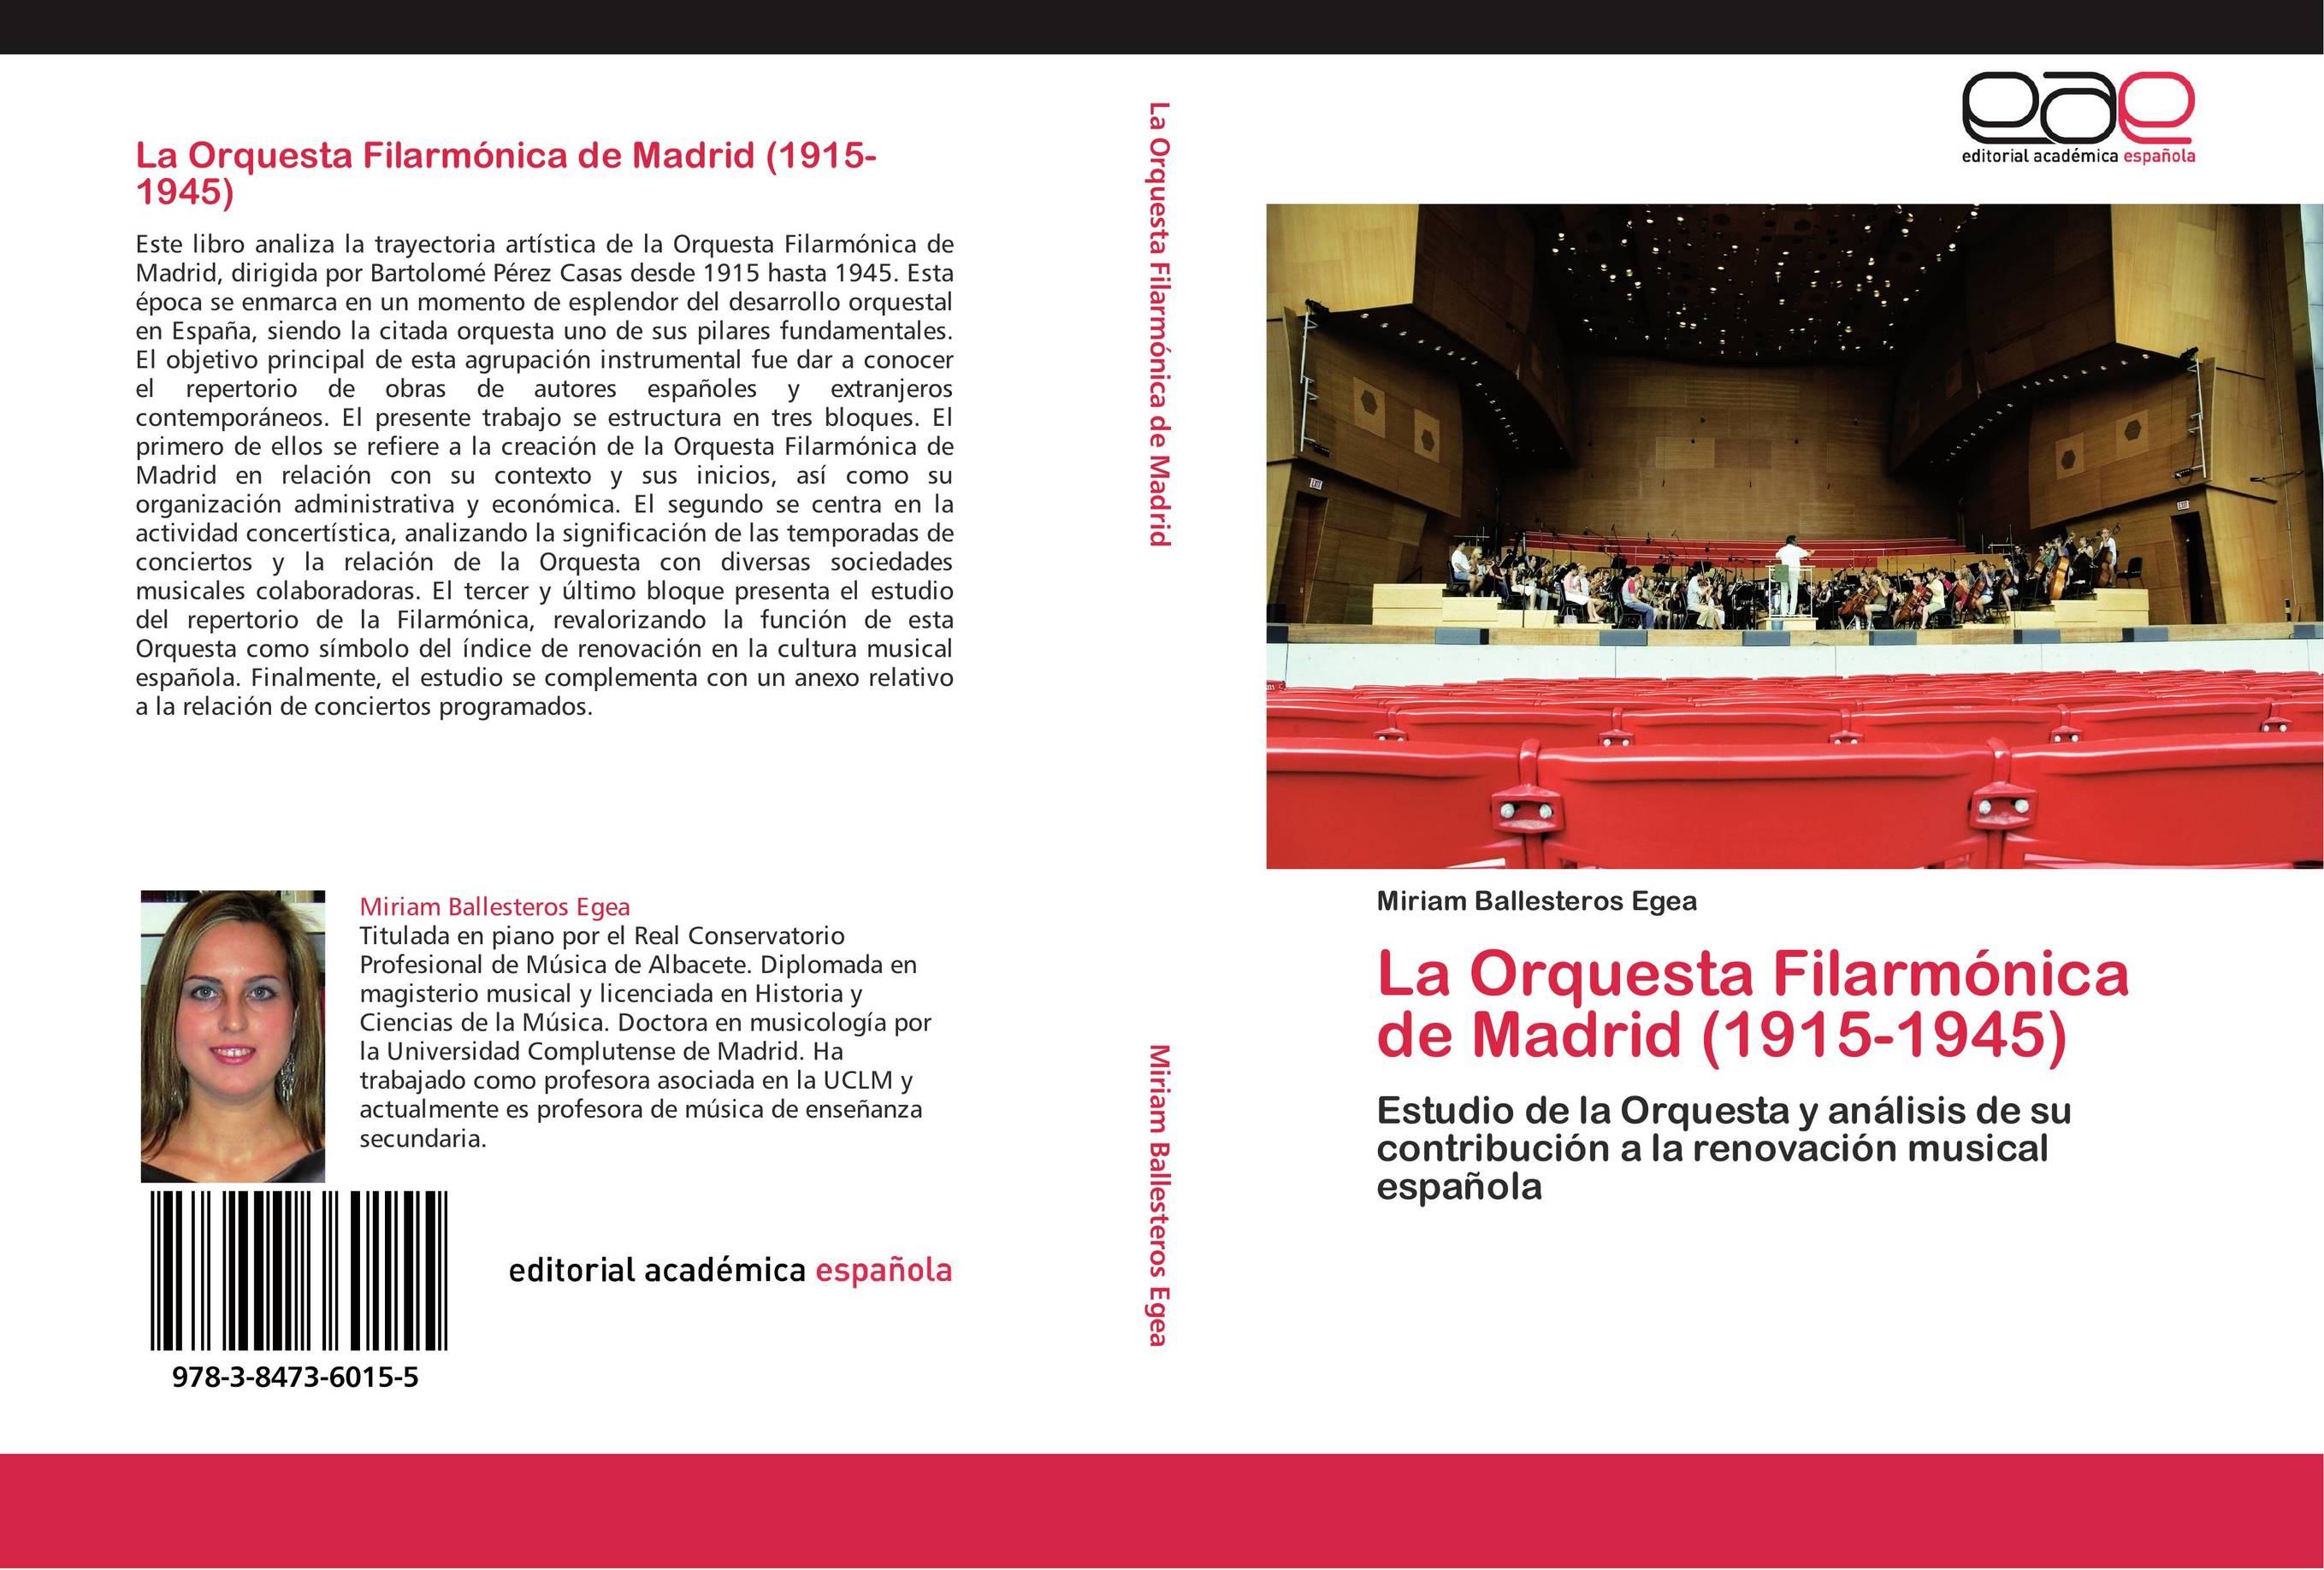 La Orquesta Filarmónica de Madrid (1915-1945)